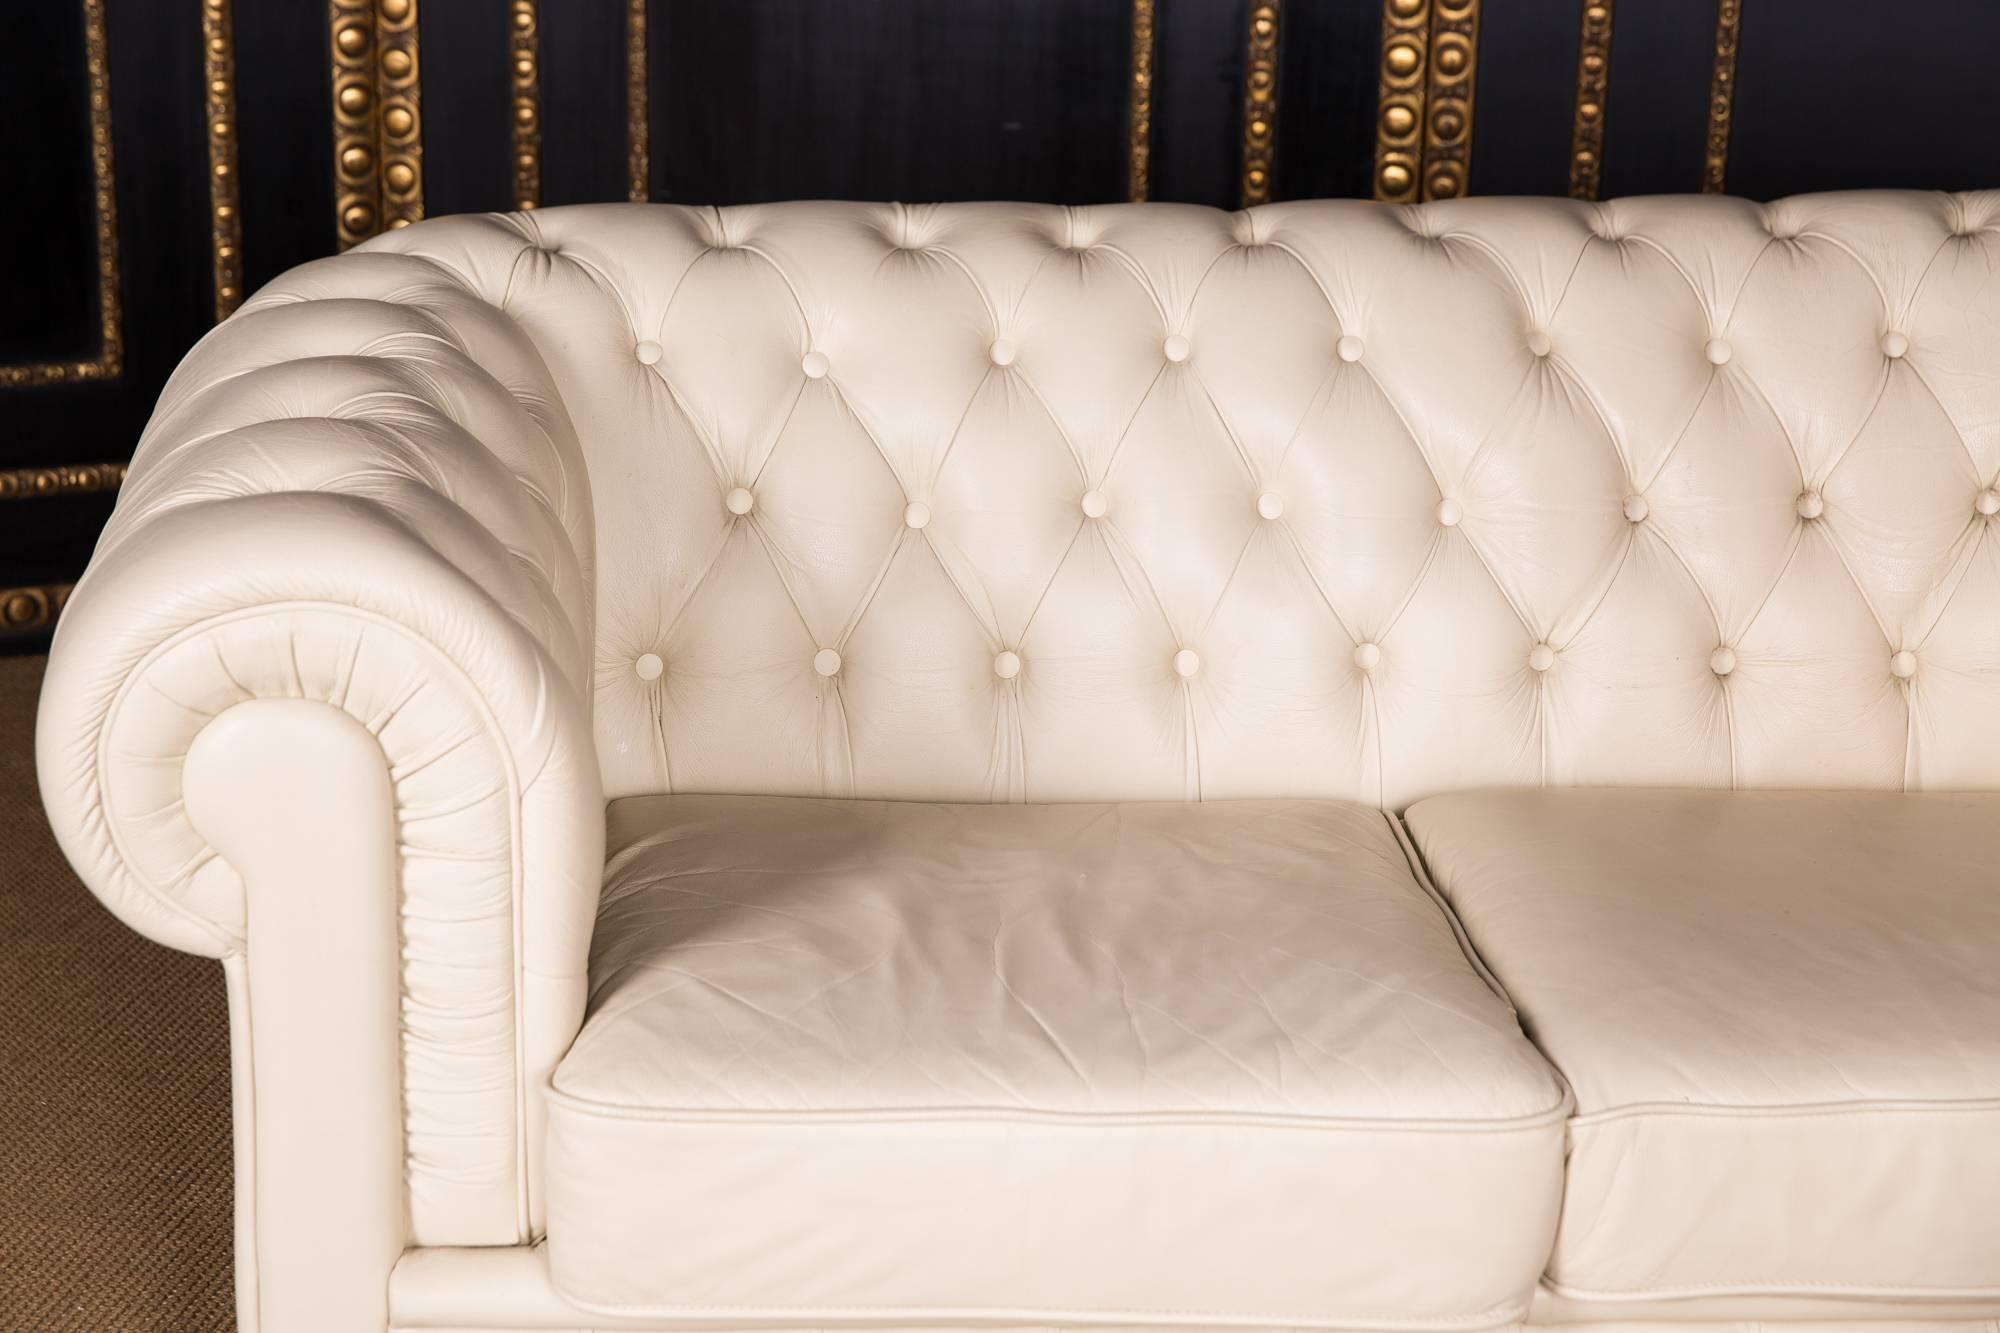 British 20th Century, Original English Chesterfield Sofa with Genuine Leather